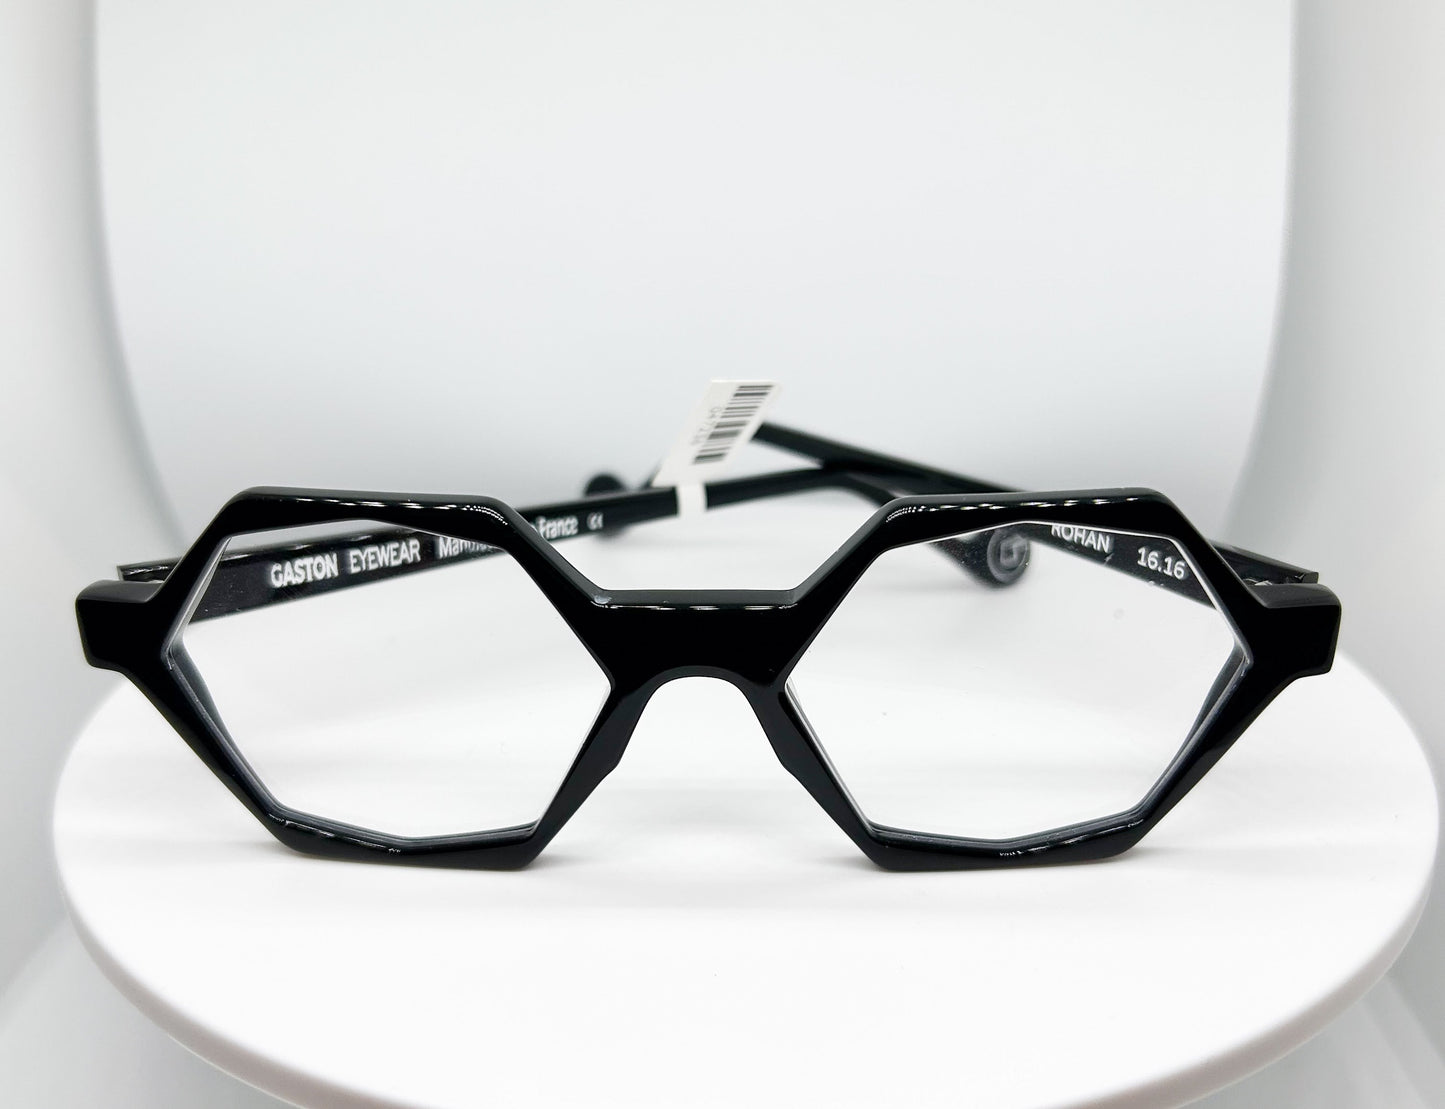 Buy Gaston Eyewear - Rohan , a  Black; Acetate Optical Frame with a Avant Garde shape. An Authorized Dealer, Adair Eyewear has a 40+ Years History of Customer Service Excellence